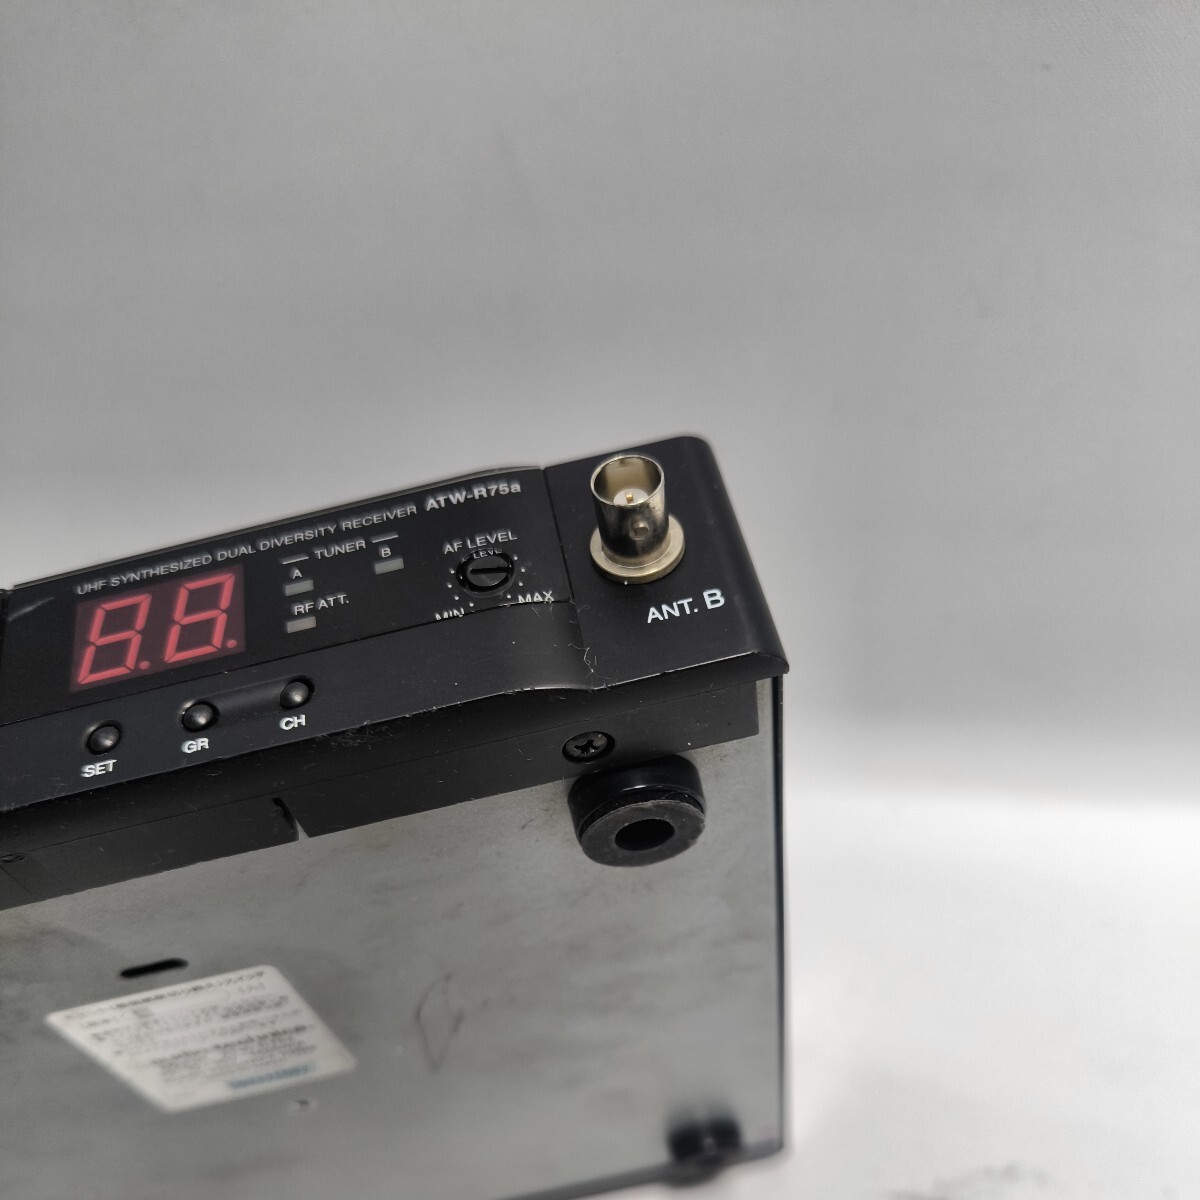 「2FL29」audio-technica ATW-R75a 電波式ワイヤレスレシーバー 中古品現状出品(240517)_画像7